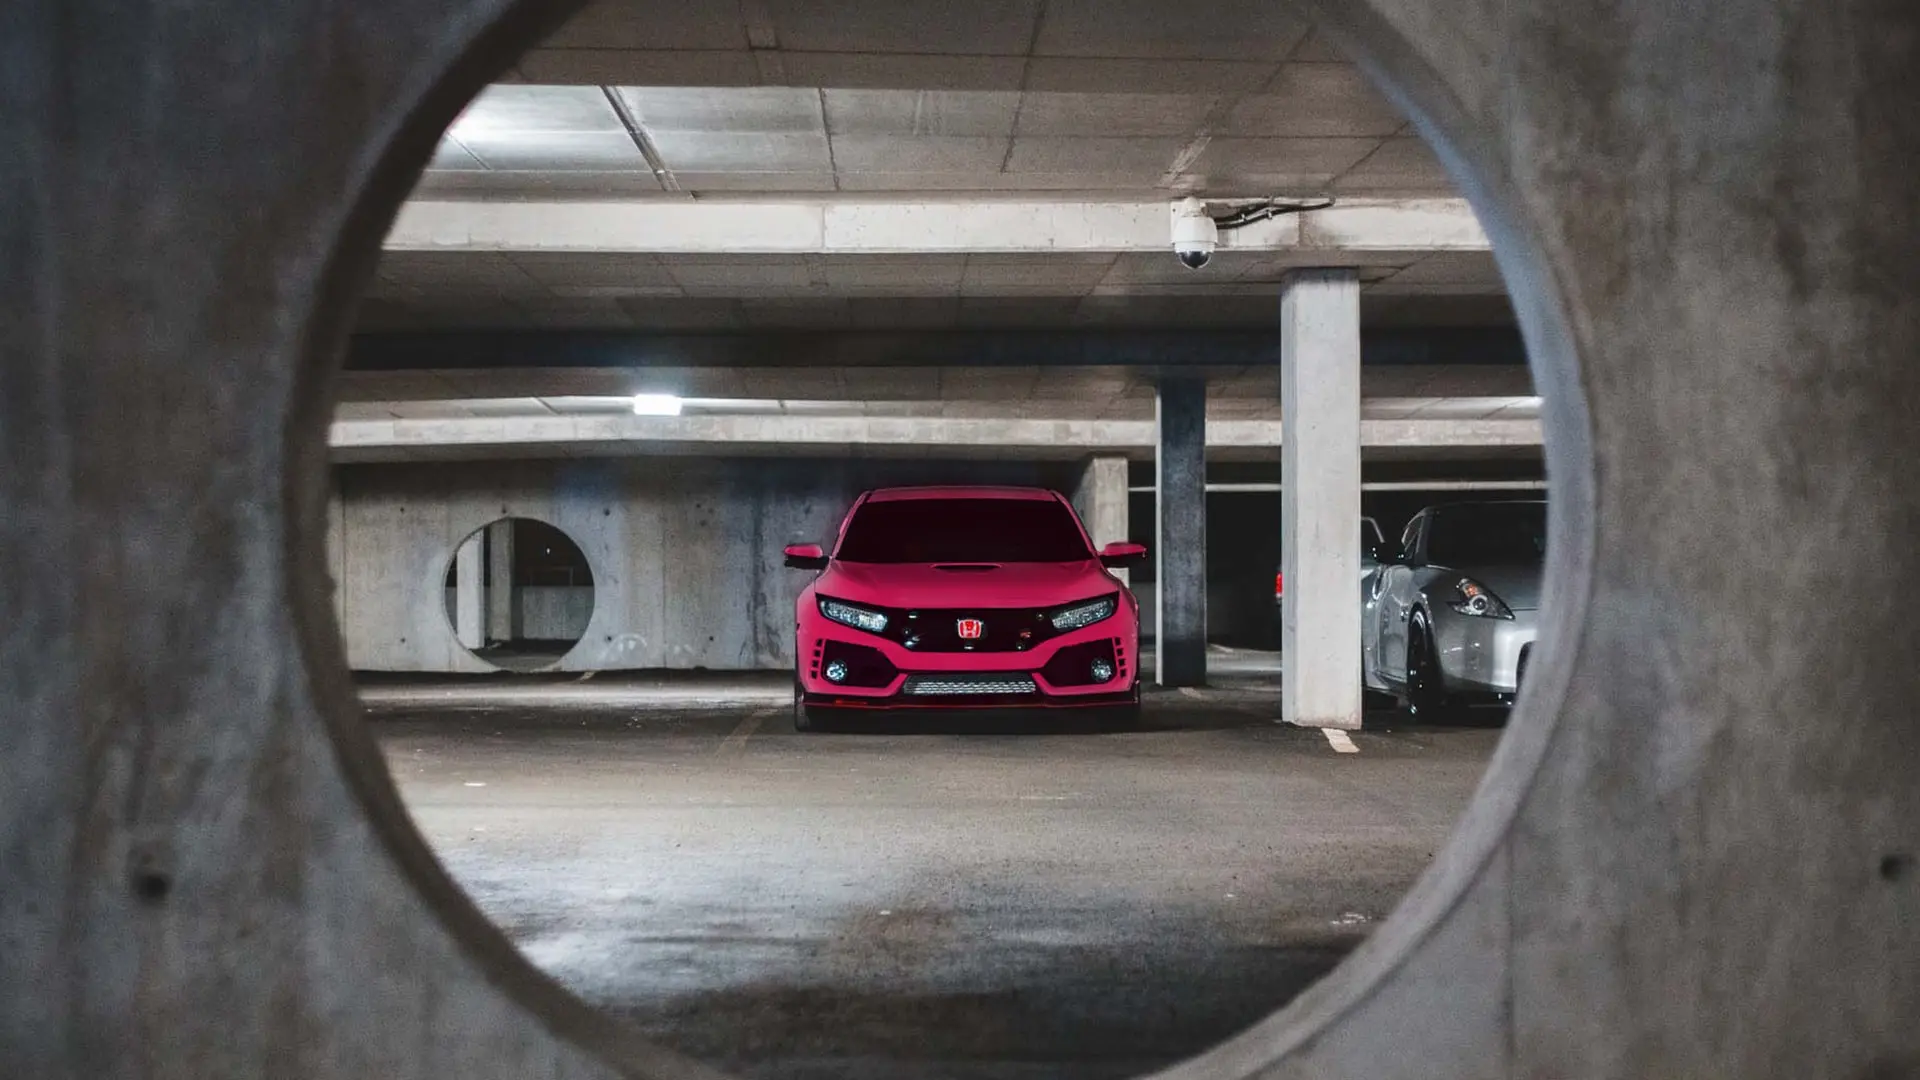 pink car in parking spot in parking garage